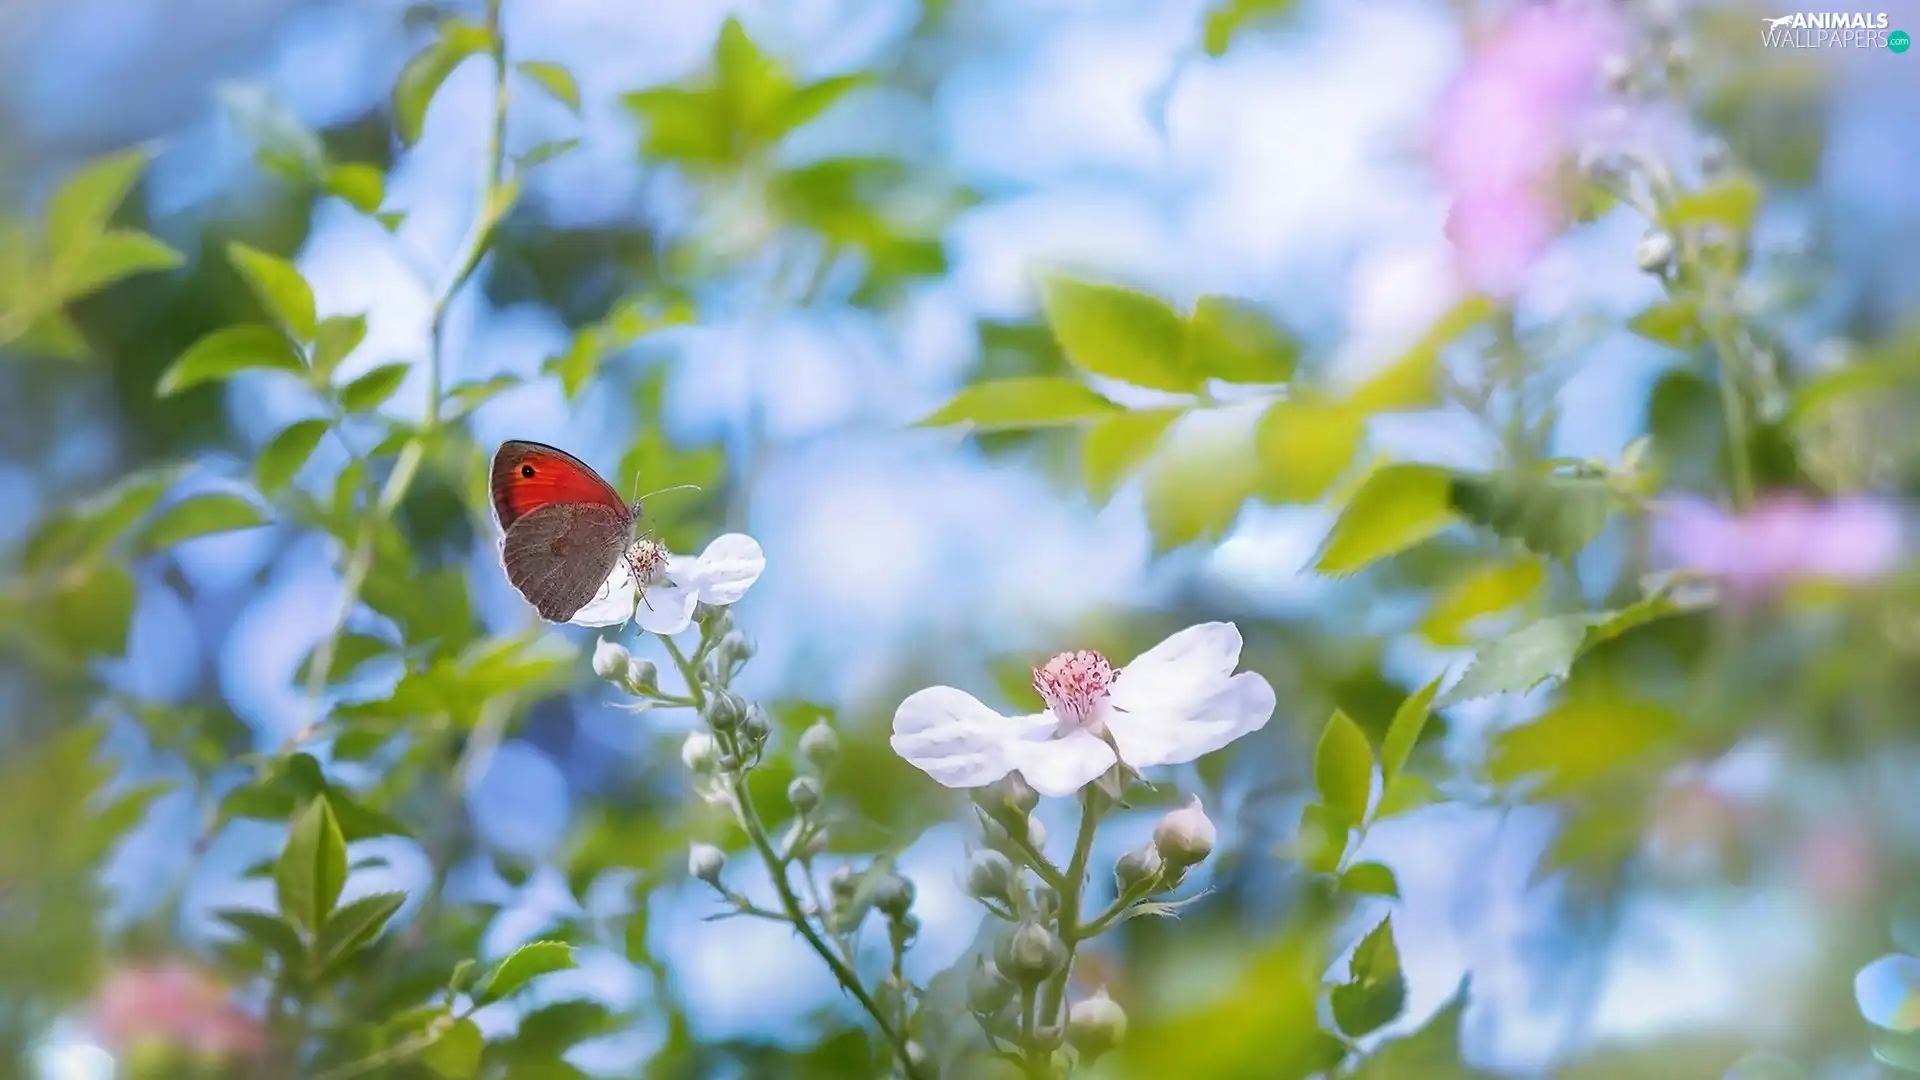 Gatekeeper, blurry background, Flowers, butterfly, White